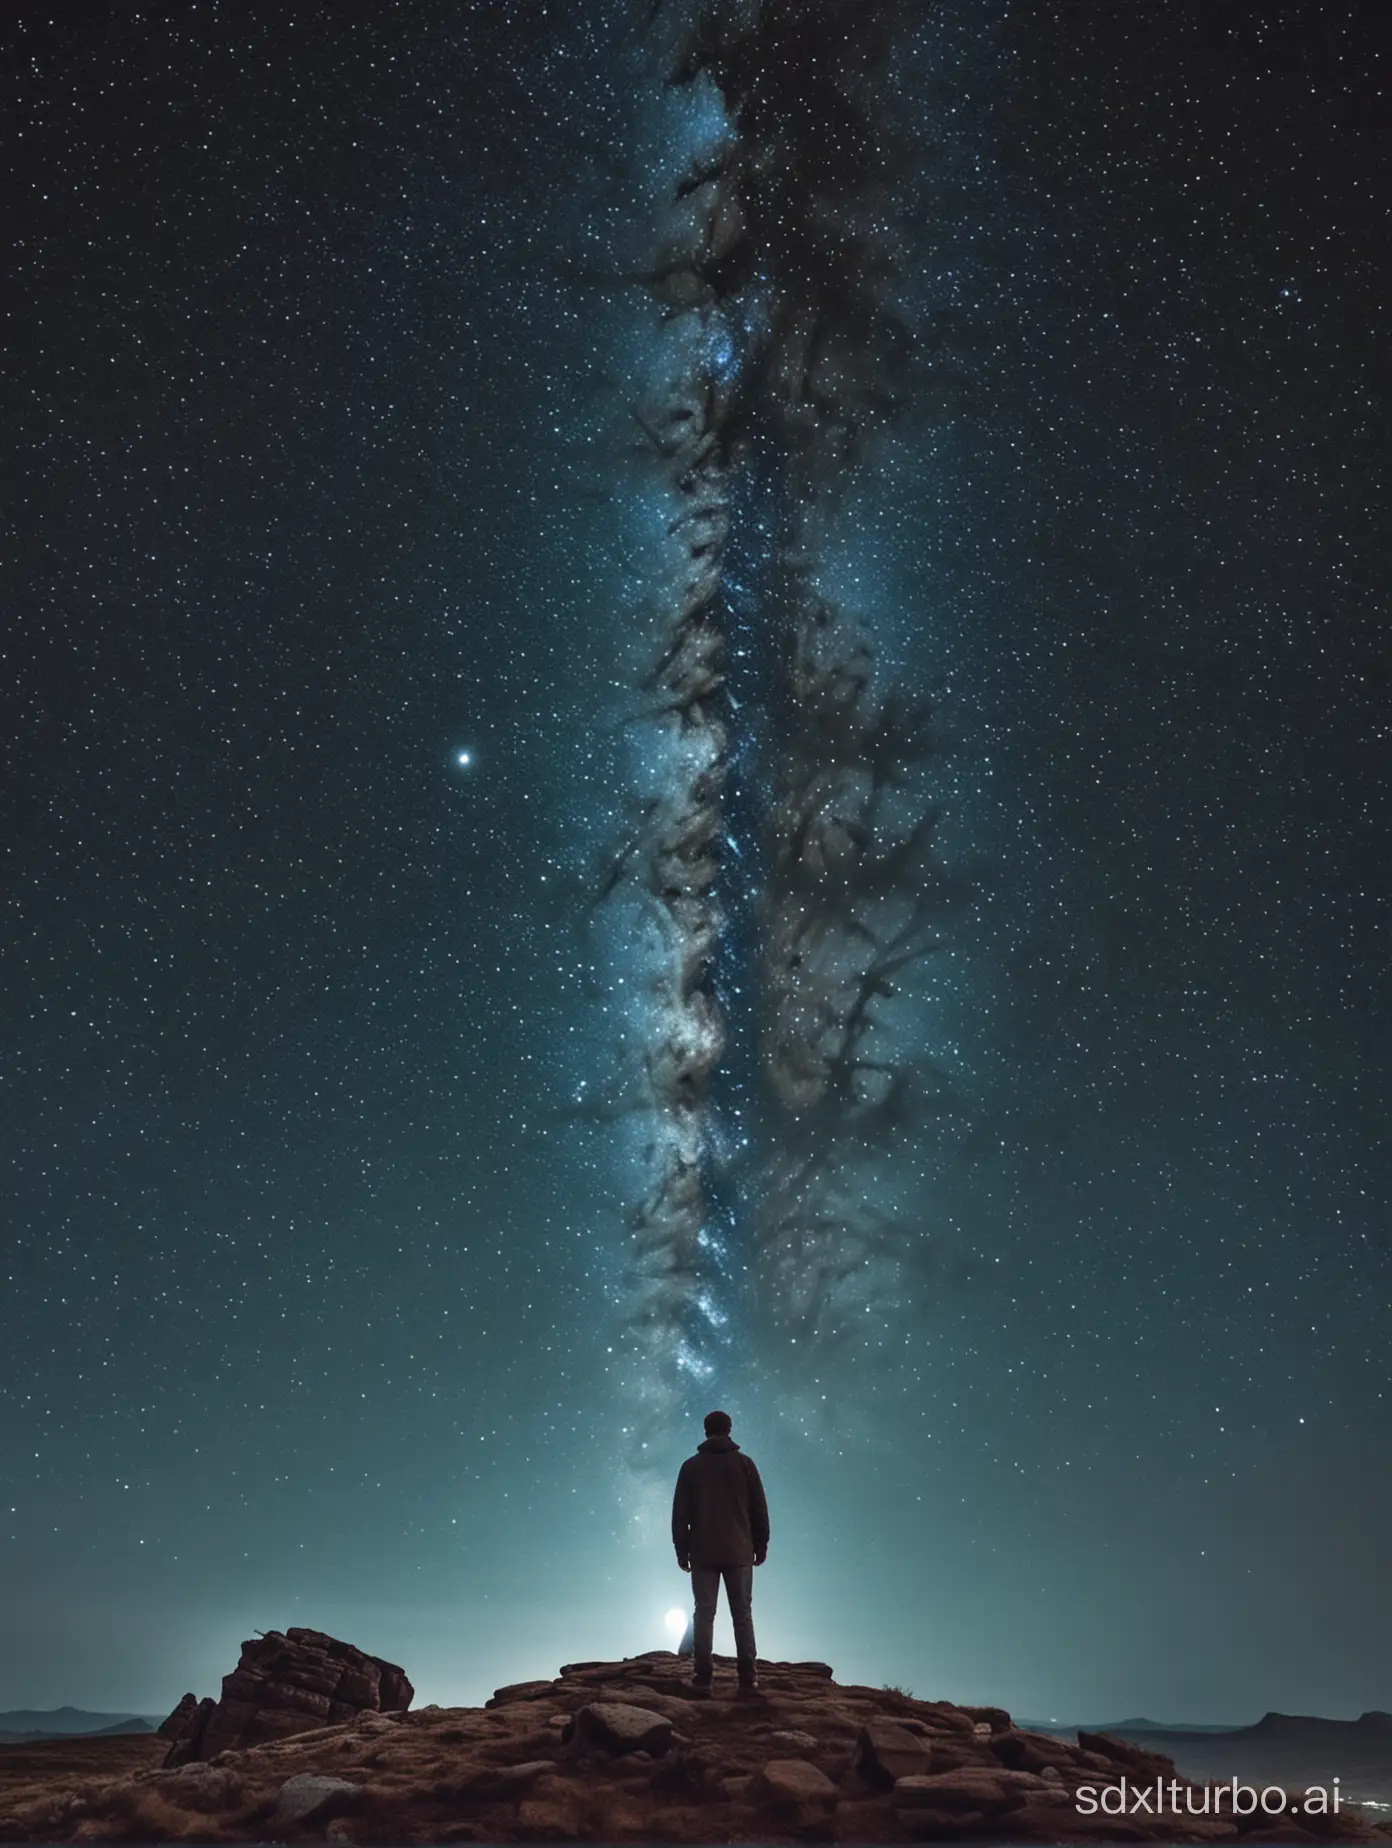 Solitary-Star-Gazer-Contemplating-the-Cosmos